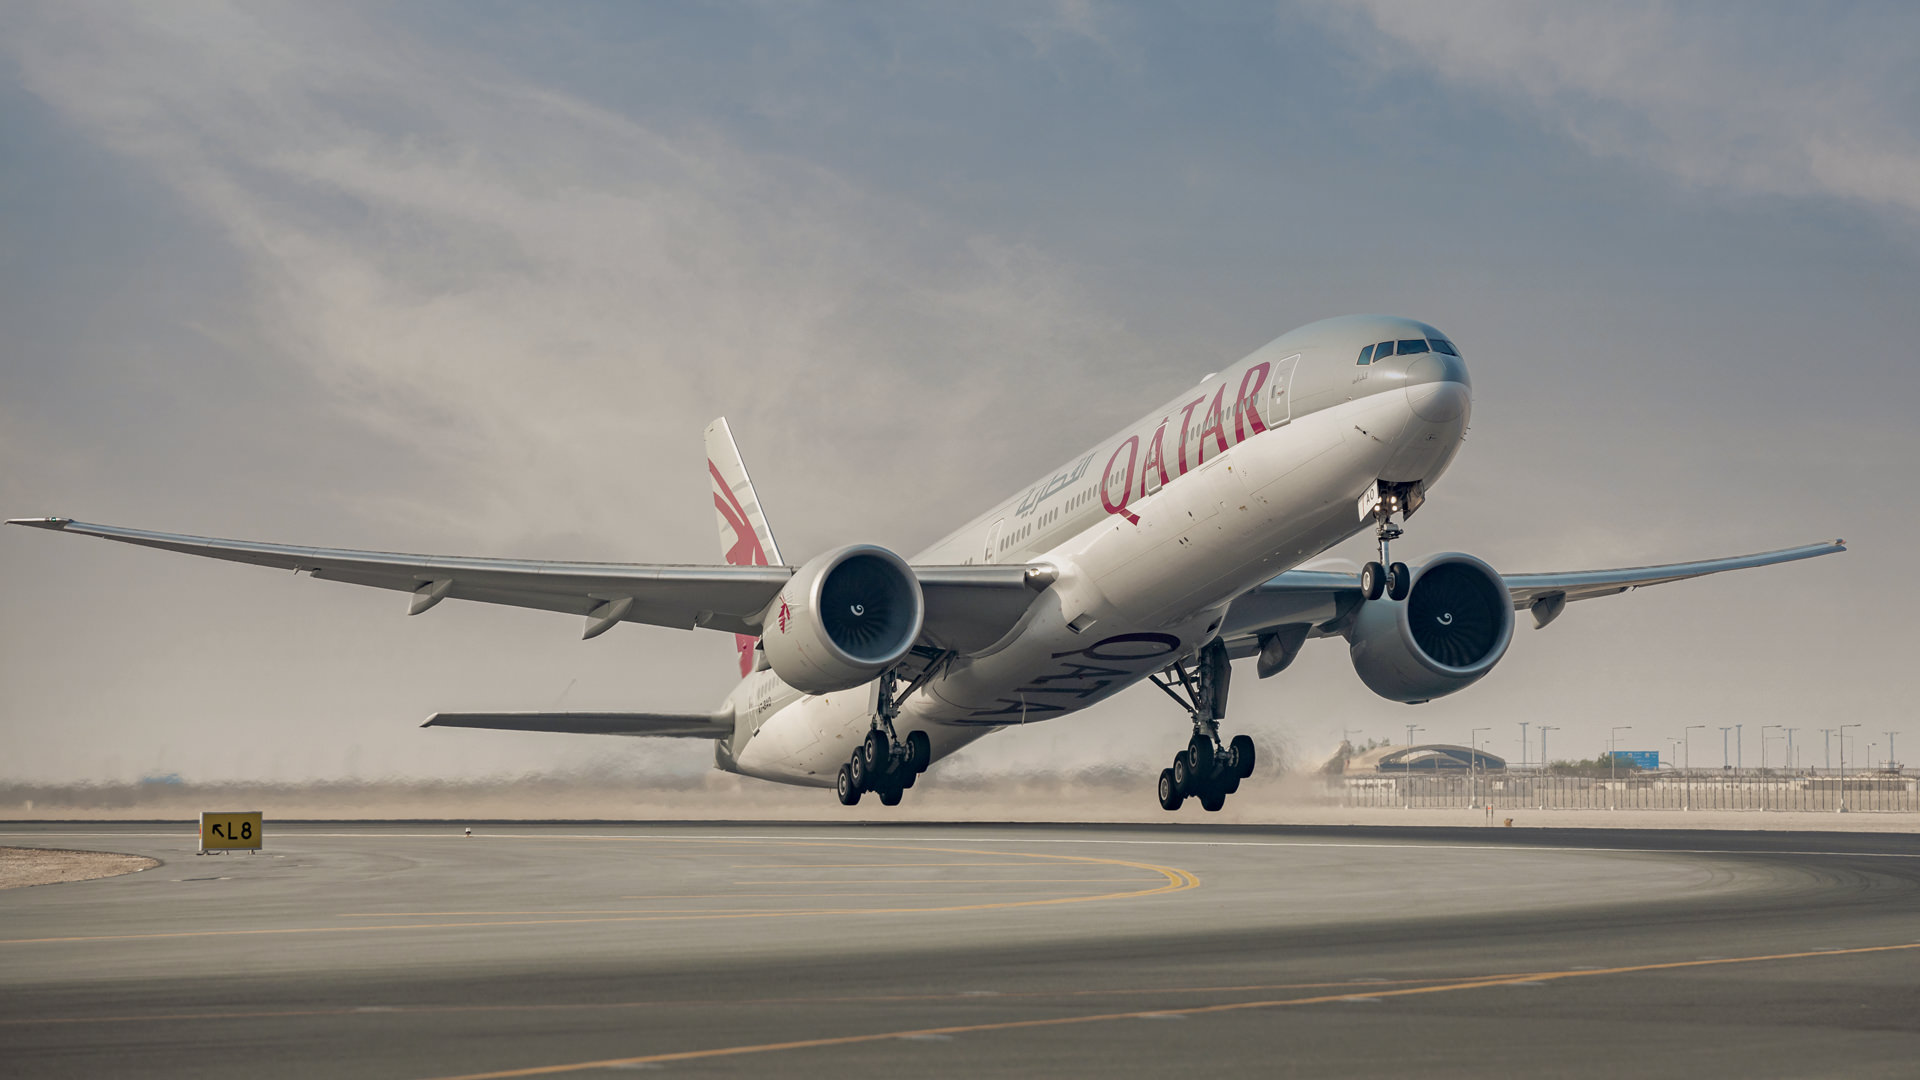 Катар купить авиабилет. Боинг 777 Freighter. Самолет Катар Эйрвейз. Авиакомпания Qatar Боинг-777. Катар Эйрлайнс самолеты.